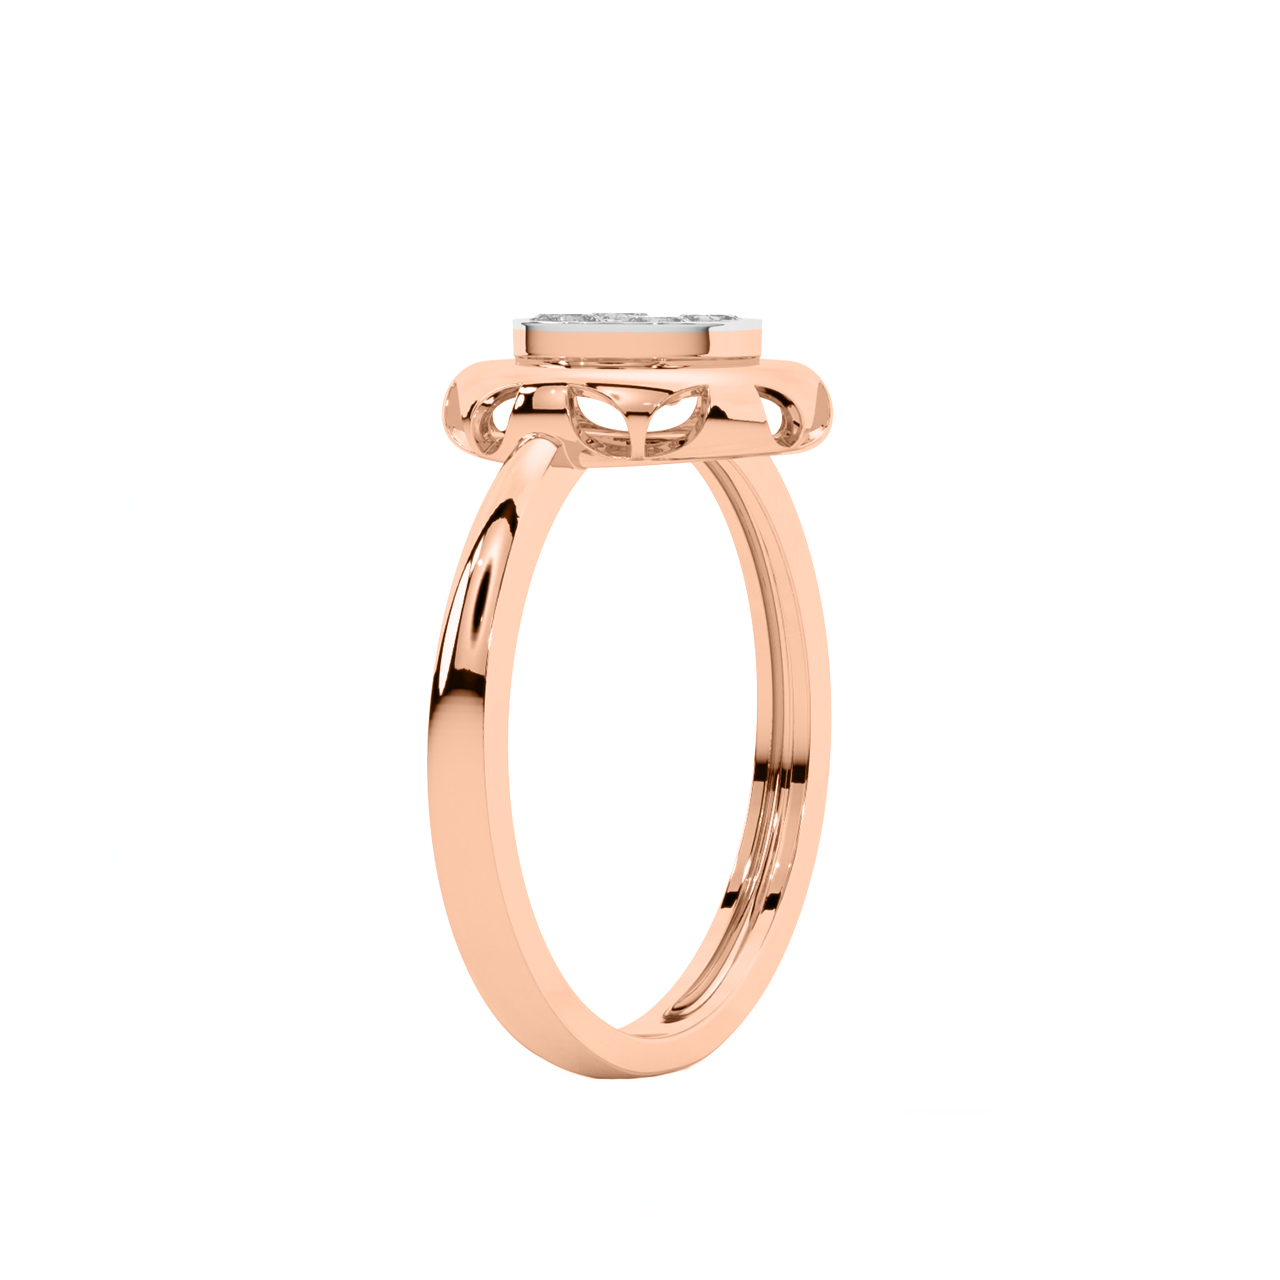 Gleaming Diamond Engagement Ring